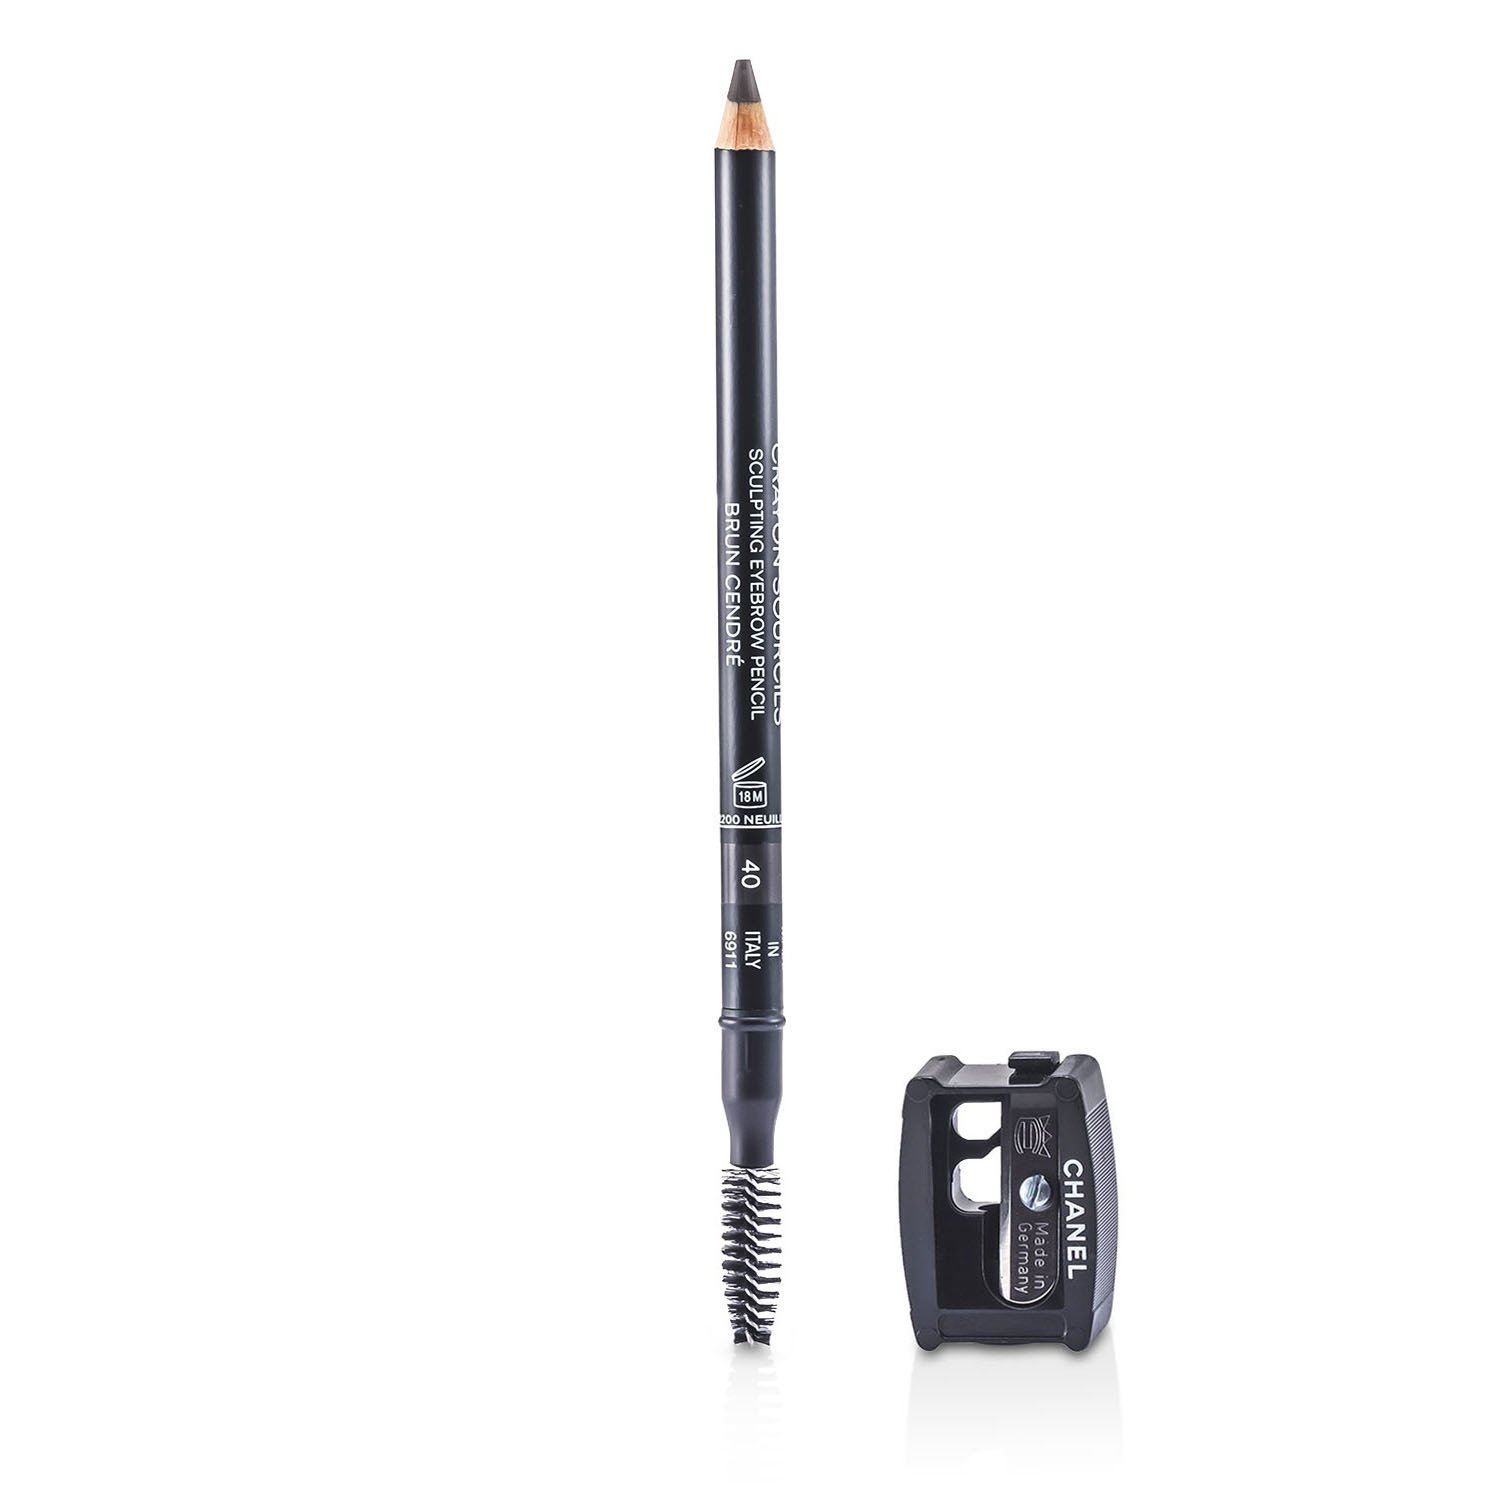  Chanel Crayon Sourcils Sculpting Eyebrow Pencil # 60 Noir  Cendre 1G/0.03Oz : Eyebrow Makeup : Beauty & Personal Care